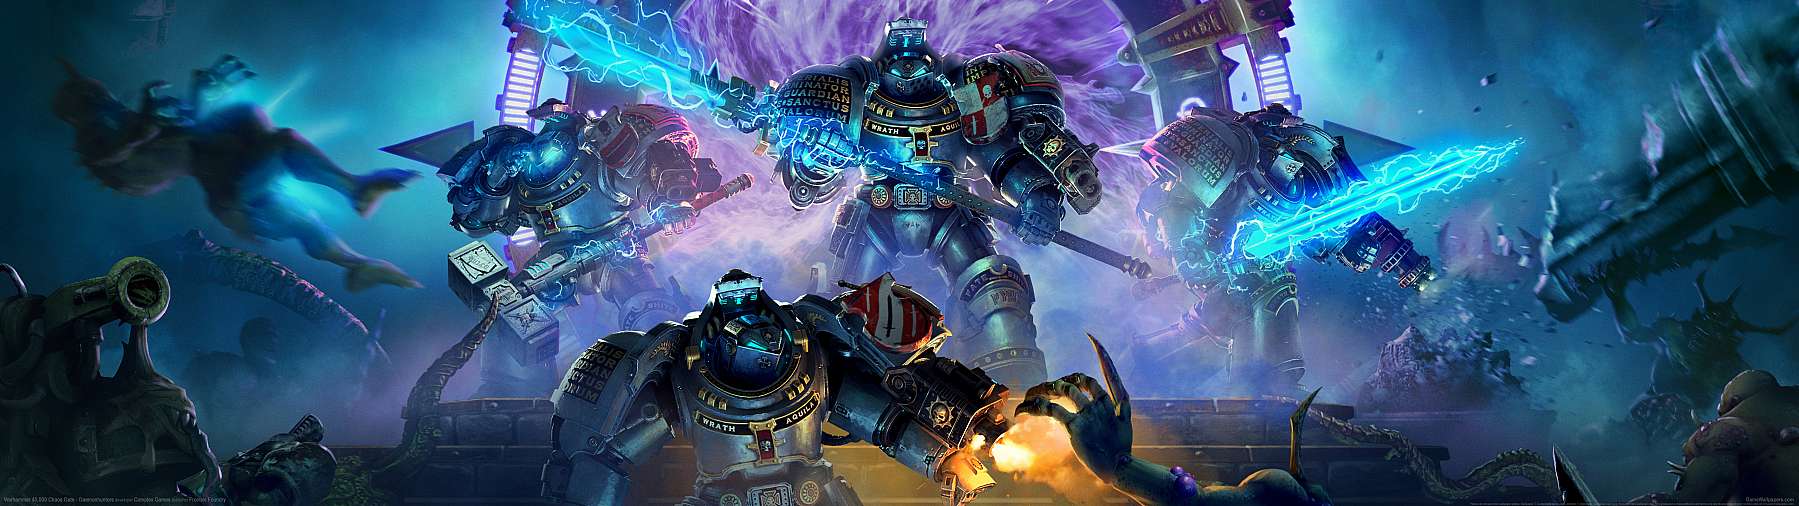 Warhammer 40,000: Chaos Gate - Daemonhunters wallpaper or background